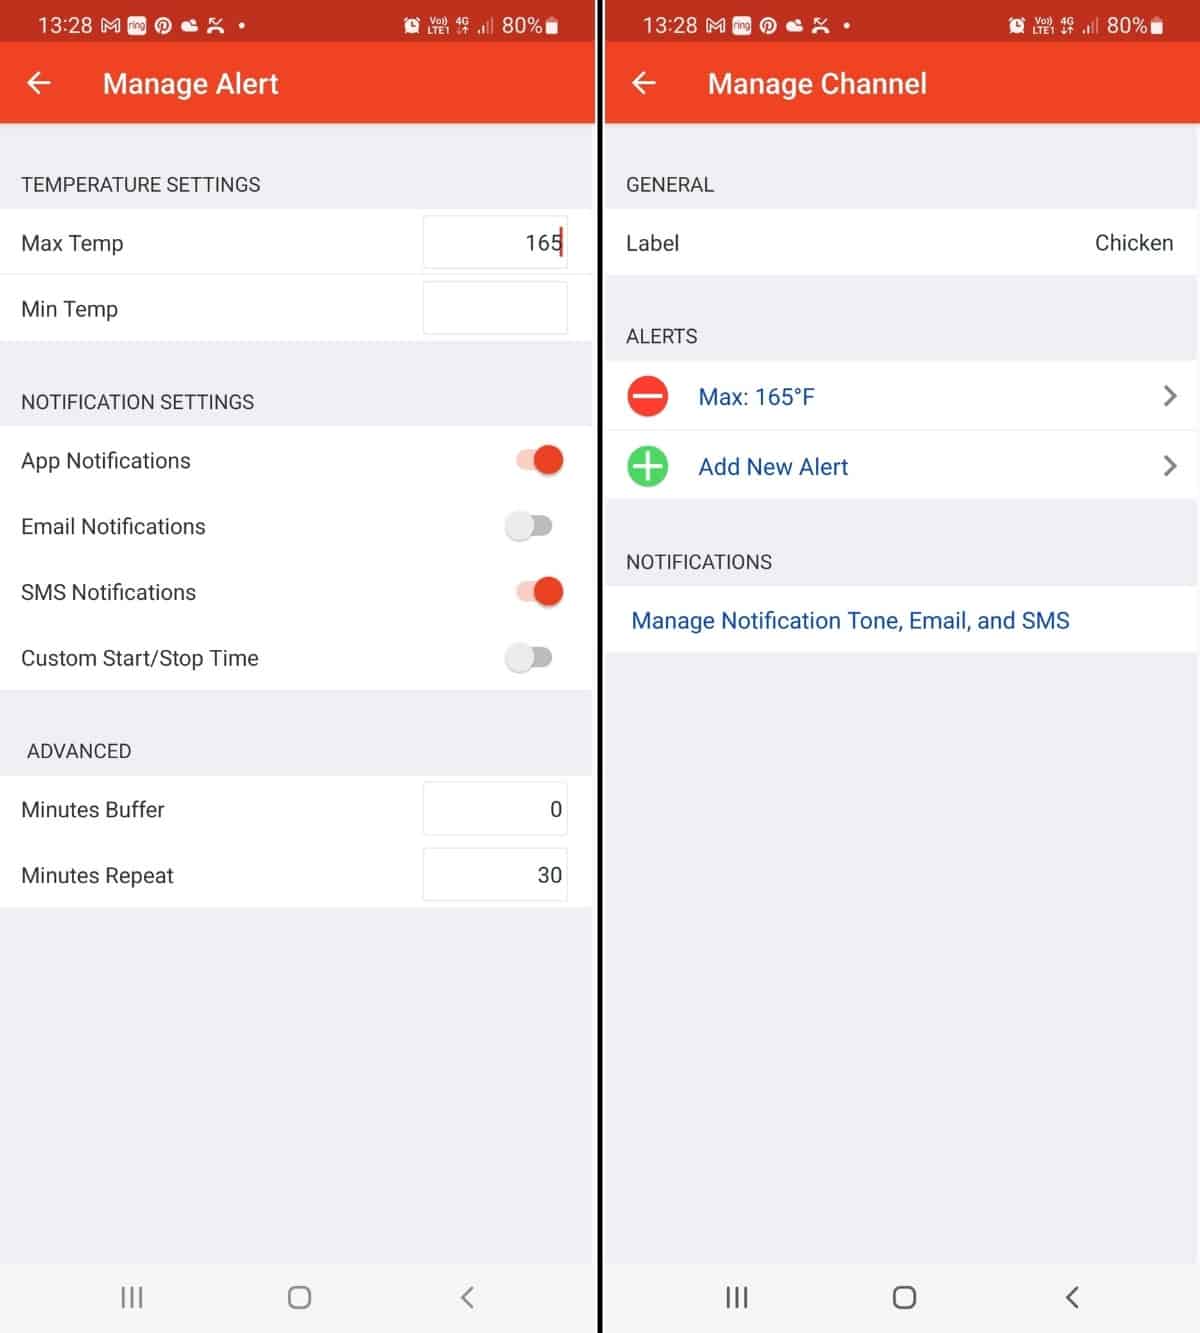 FireBoard app screenshots showing alerts settings screen, and an alert being received.